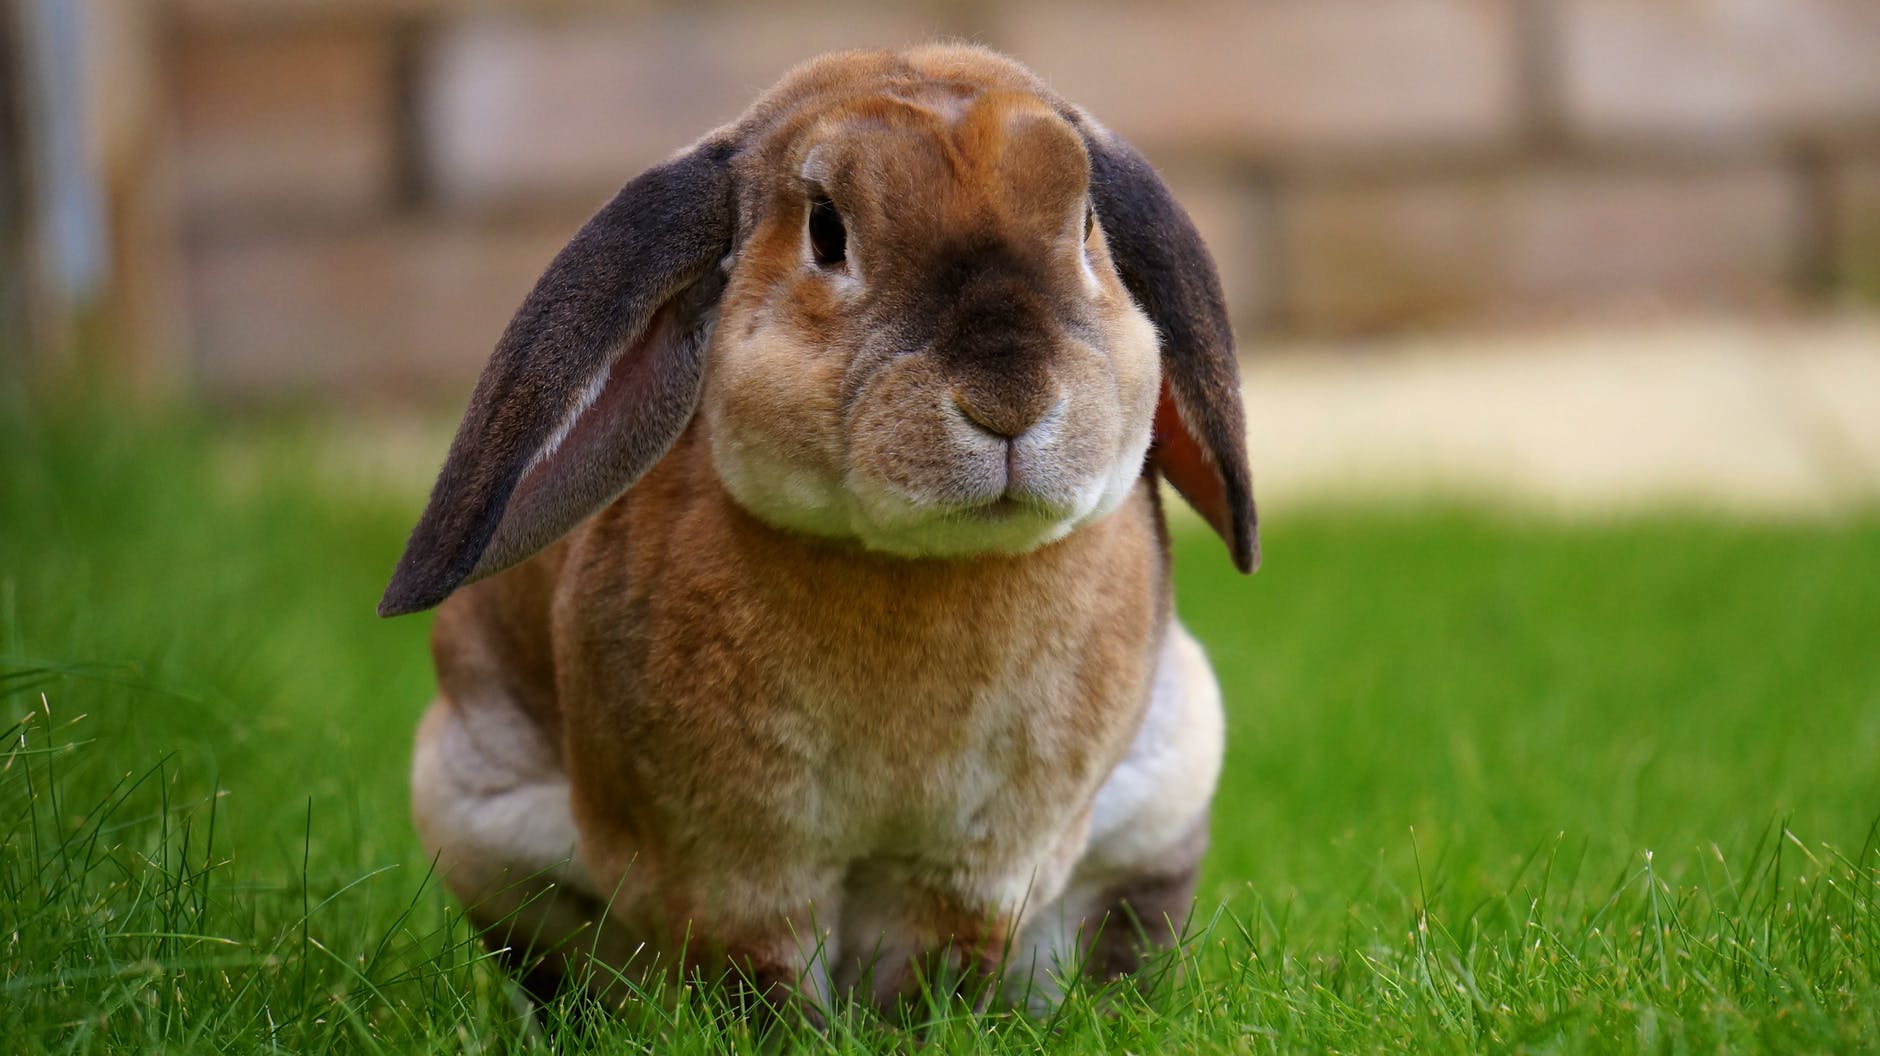 Rabbit animal in the grass